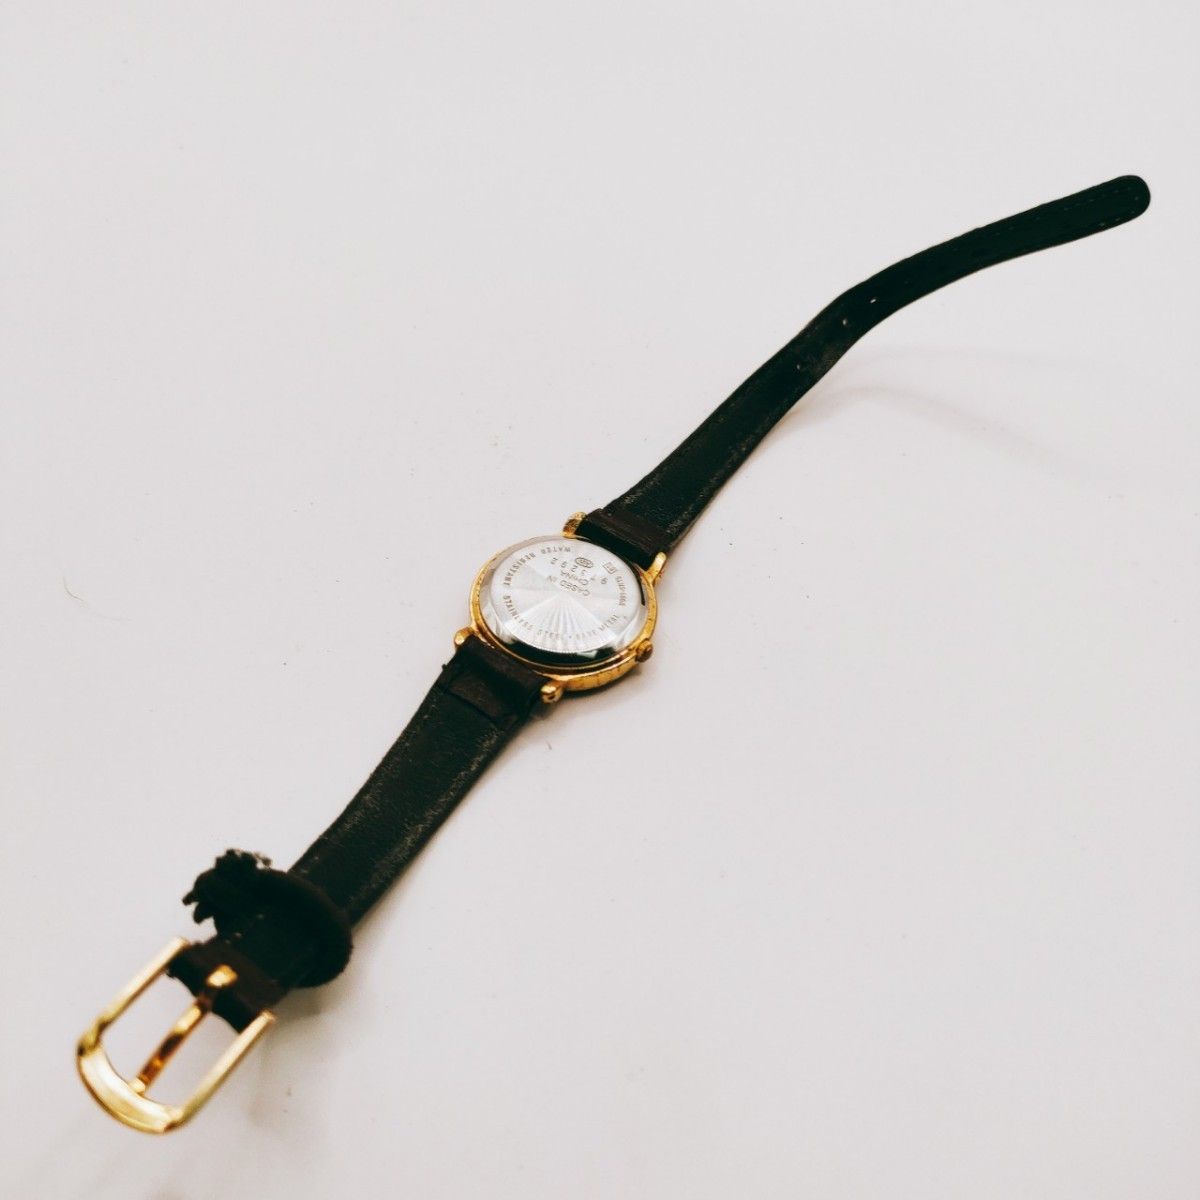 #123【Disney】SEIKO セイコー ALBA アルバ V501-6N10 腕時計 アナログ 3針 白文字盤 ゴールド色